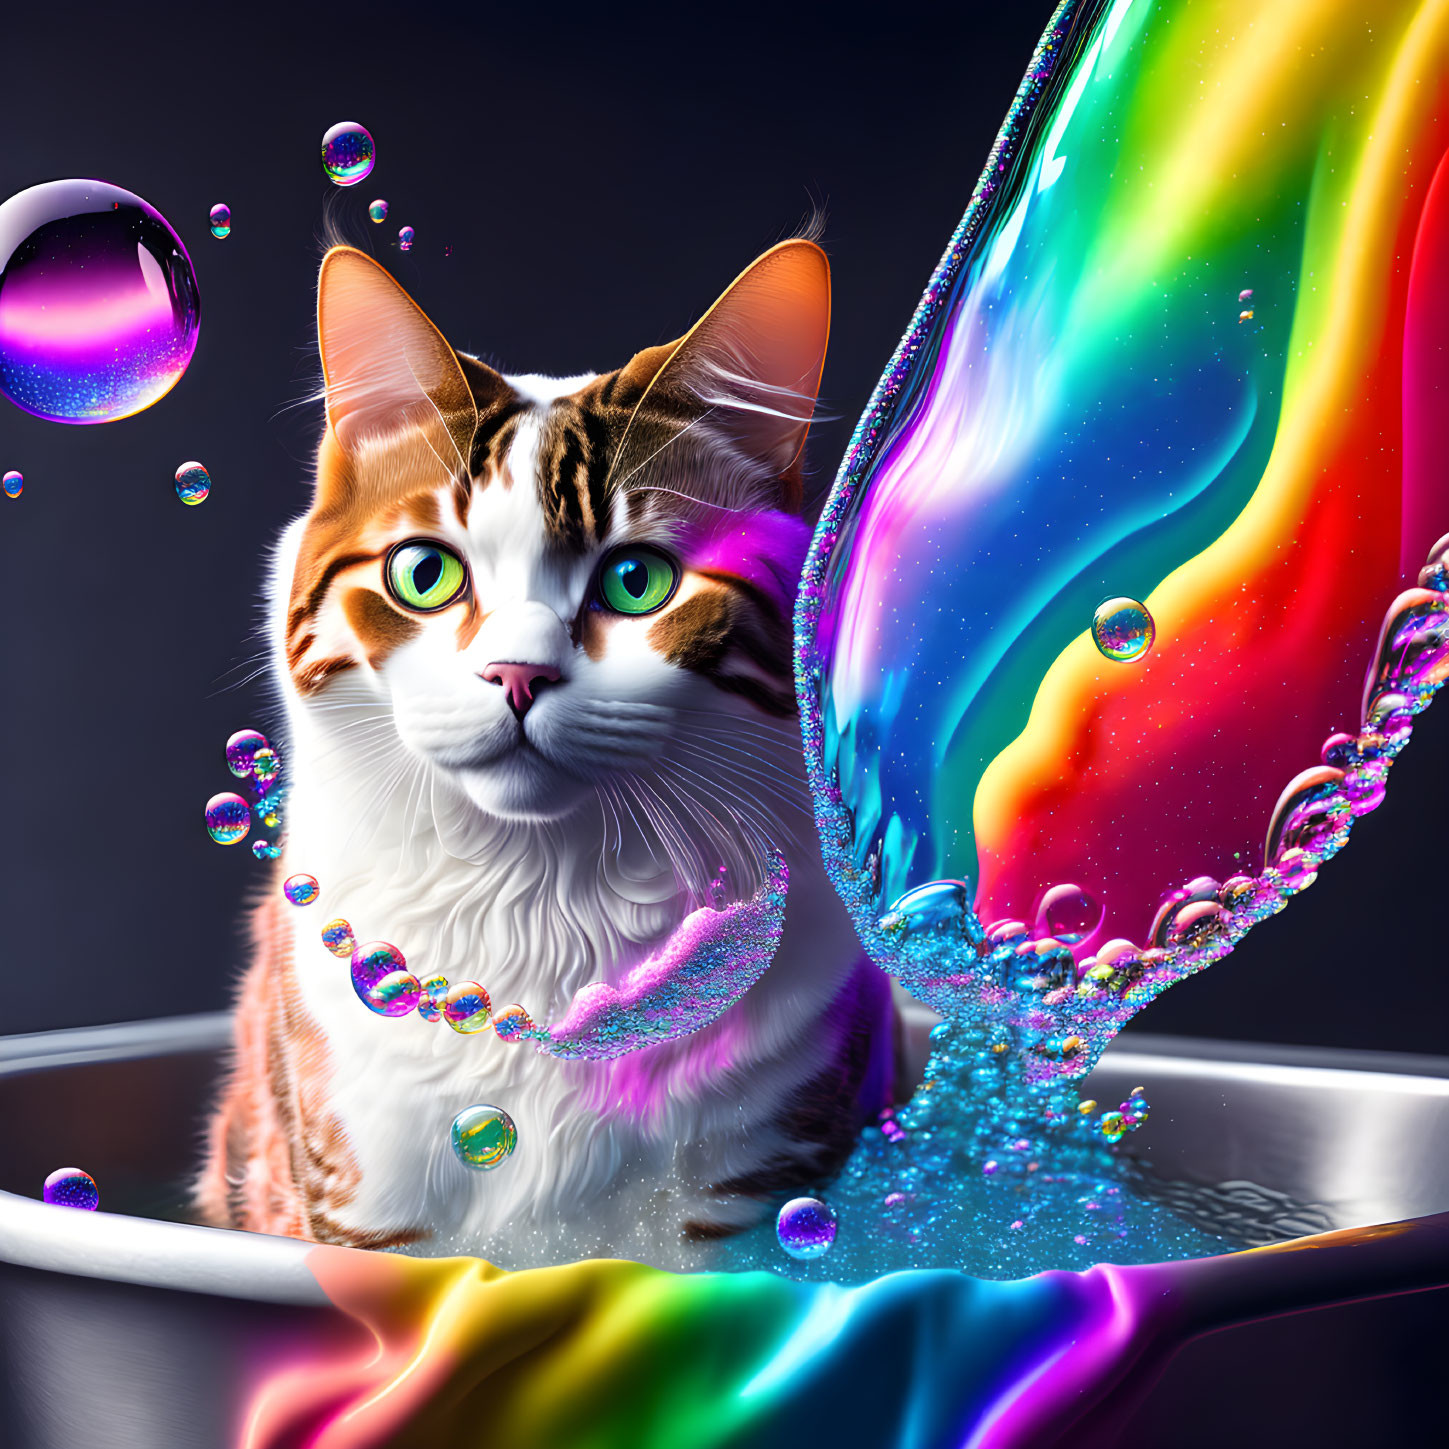 Vivid surreal cat art with rainbow liquid splash and bubbles